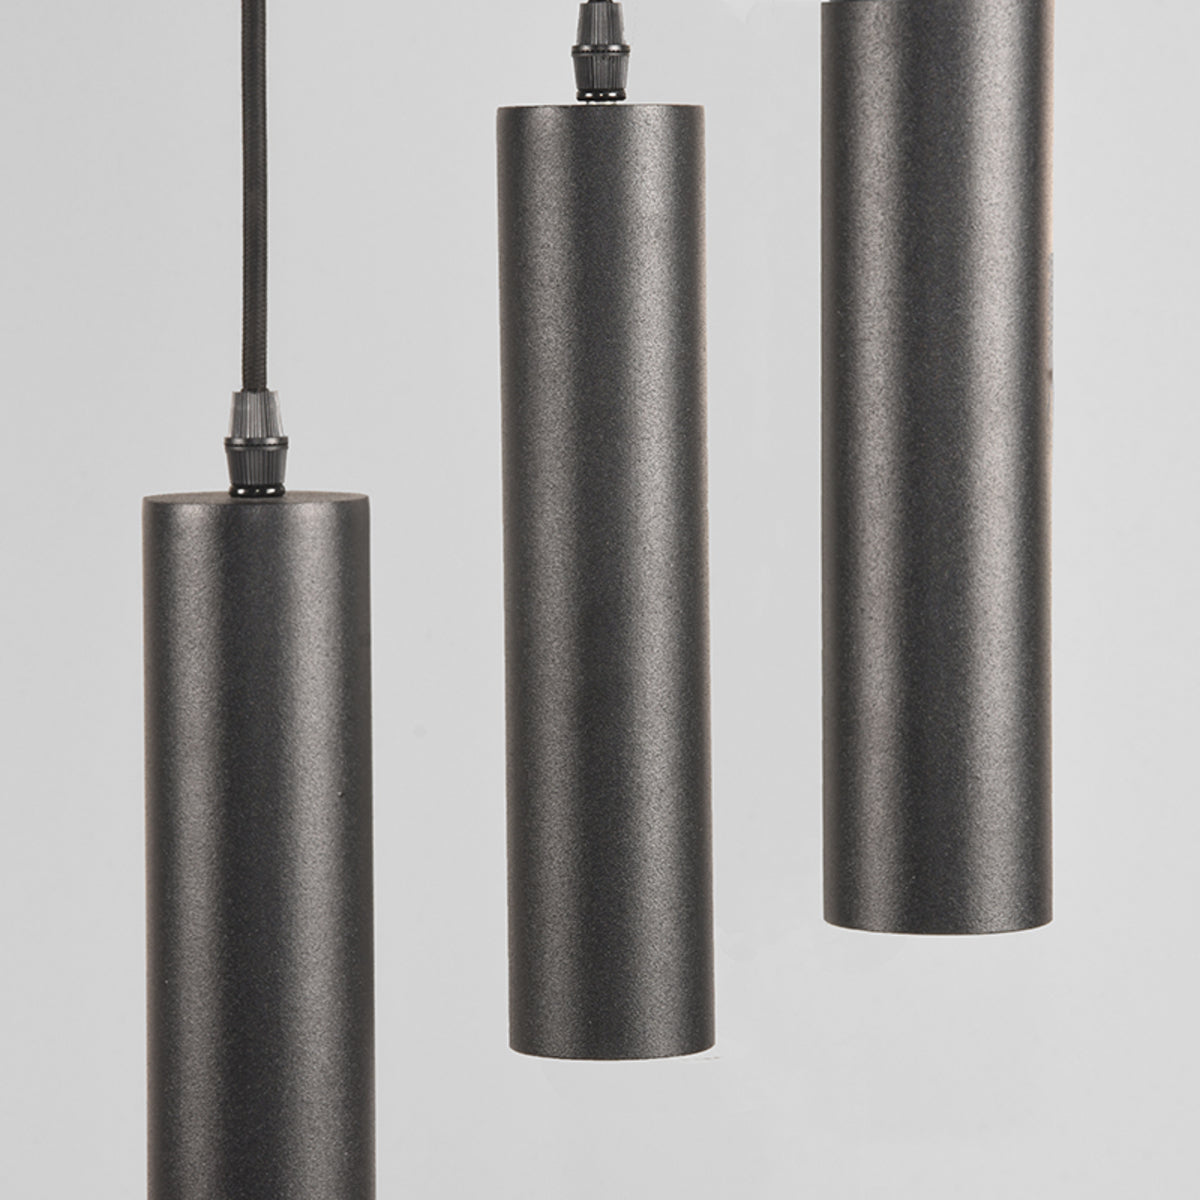 LABEL51 Hanging lamp Ferroli - Black - Metal - 3-light